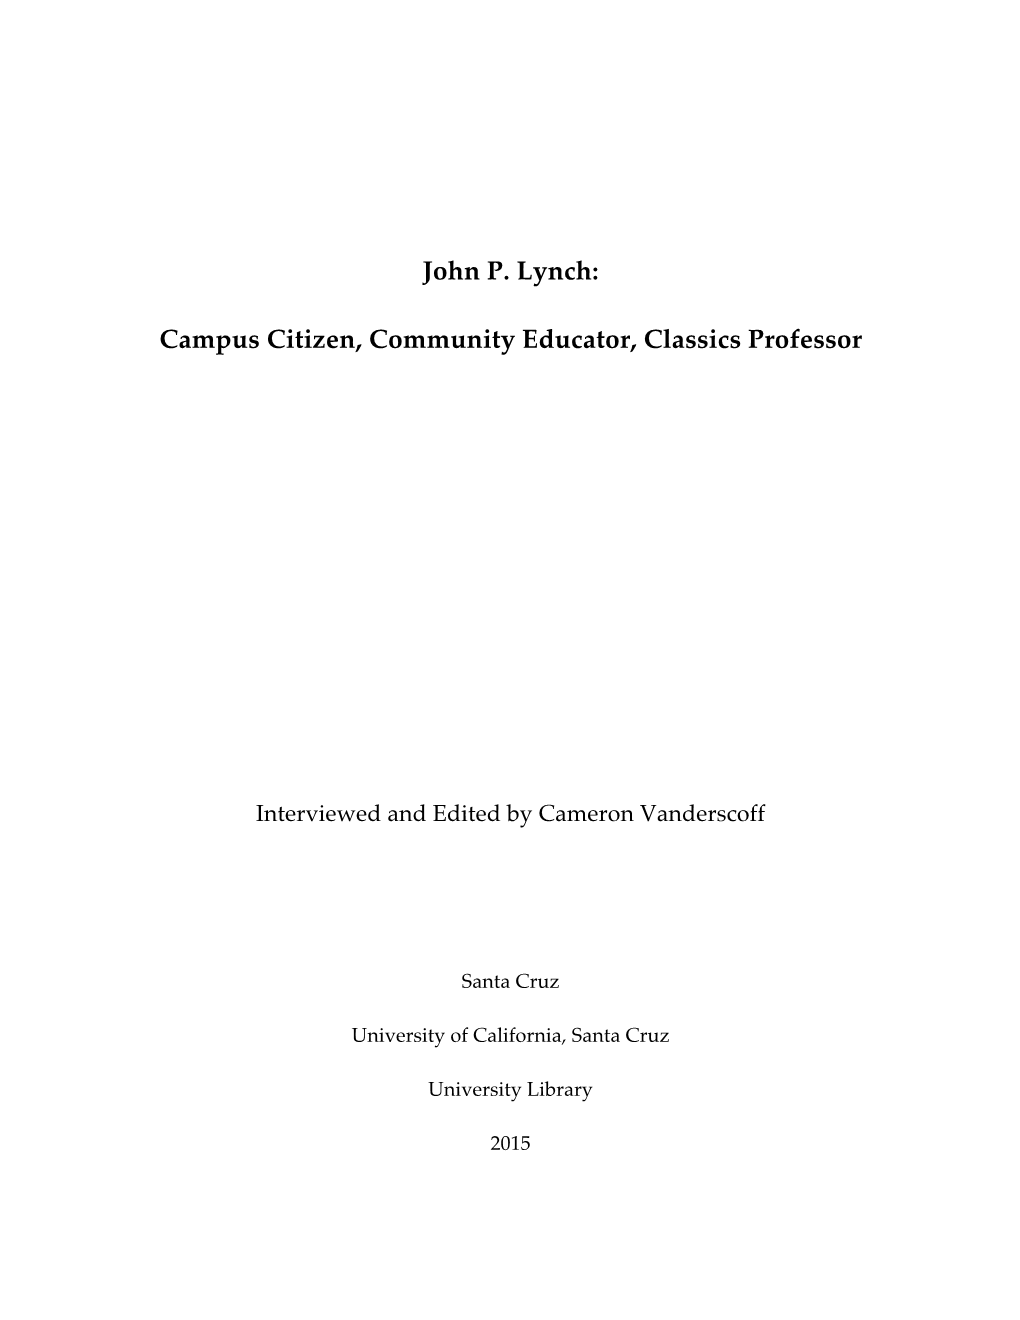 John P. Lynch: Campus Citizen, Community Educator, Classics Professor / Page 1